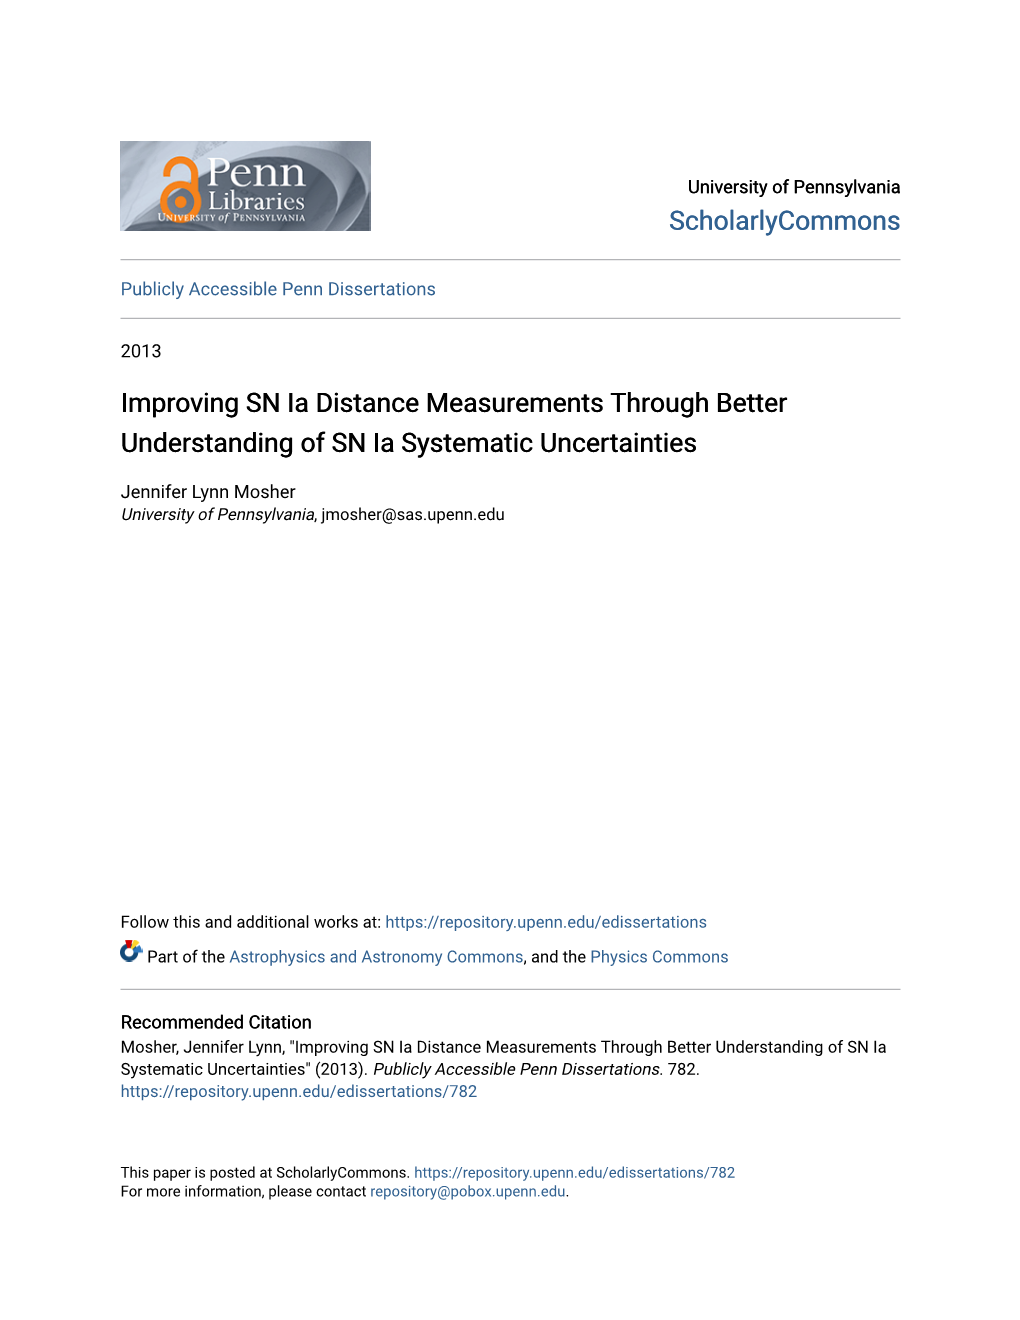 Improving SN Ia Distance Measurements Through Better Understanding of SN Ia Systematic Uncertainties